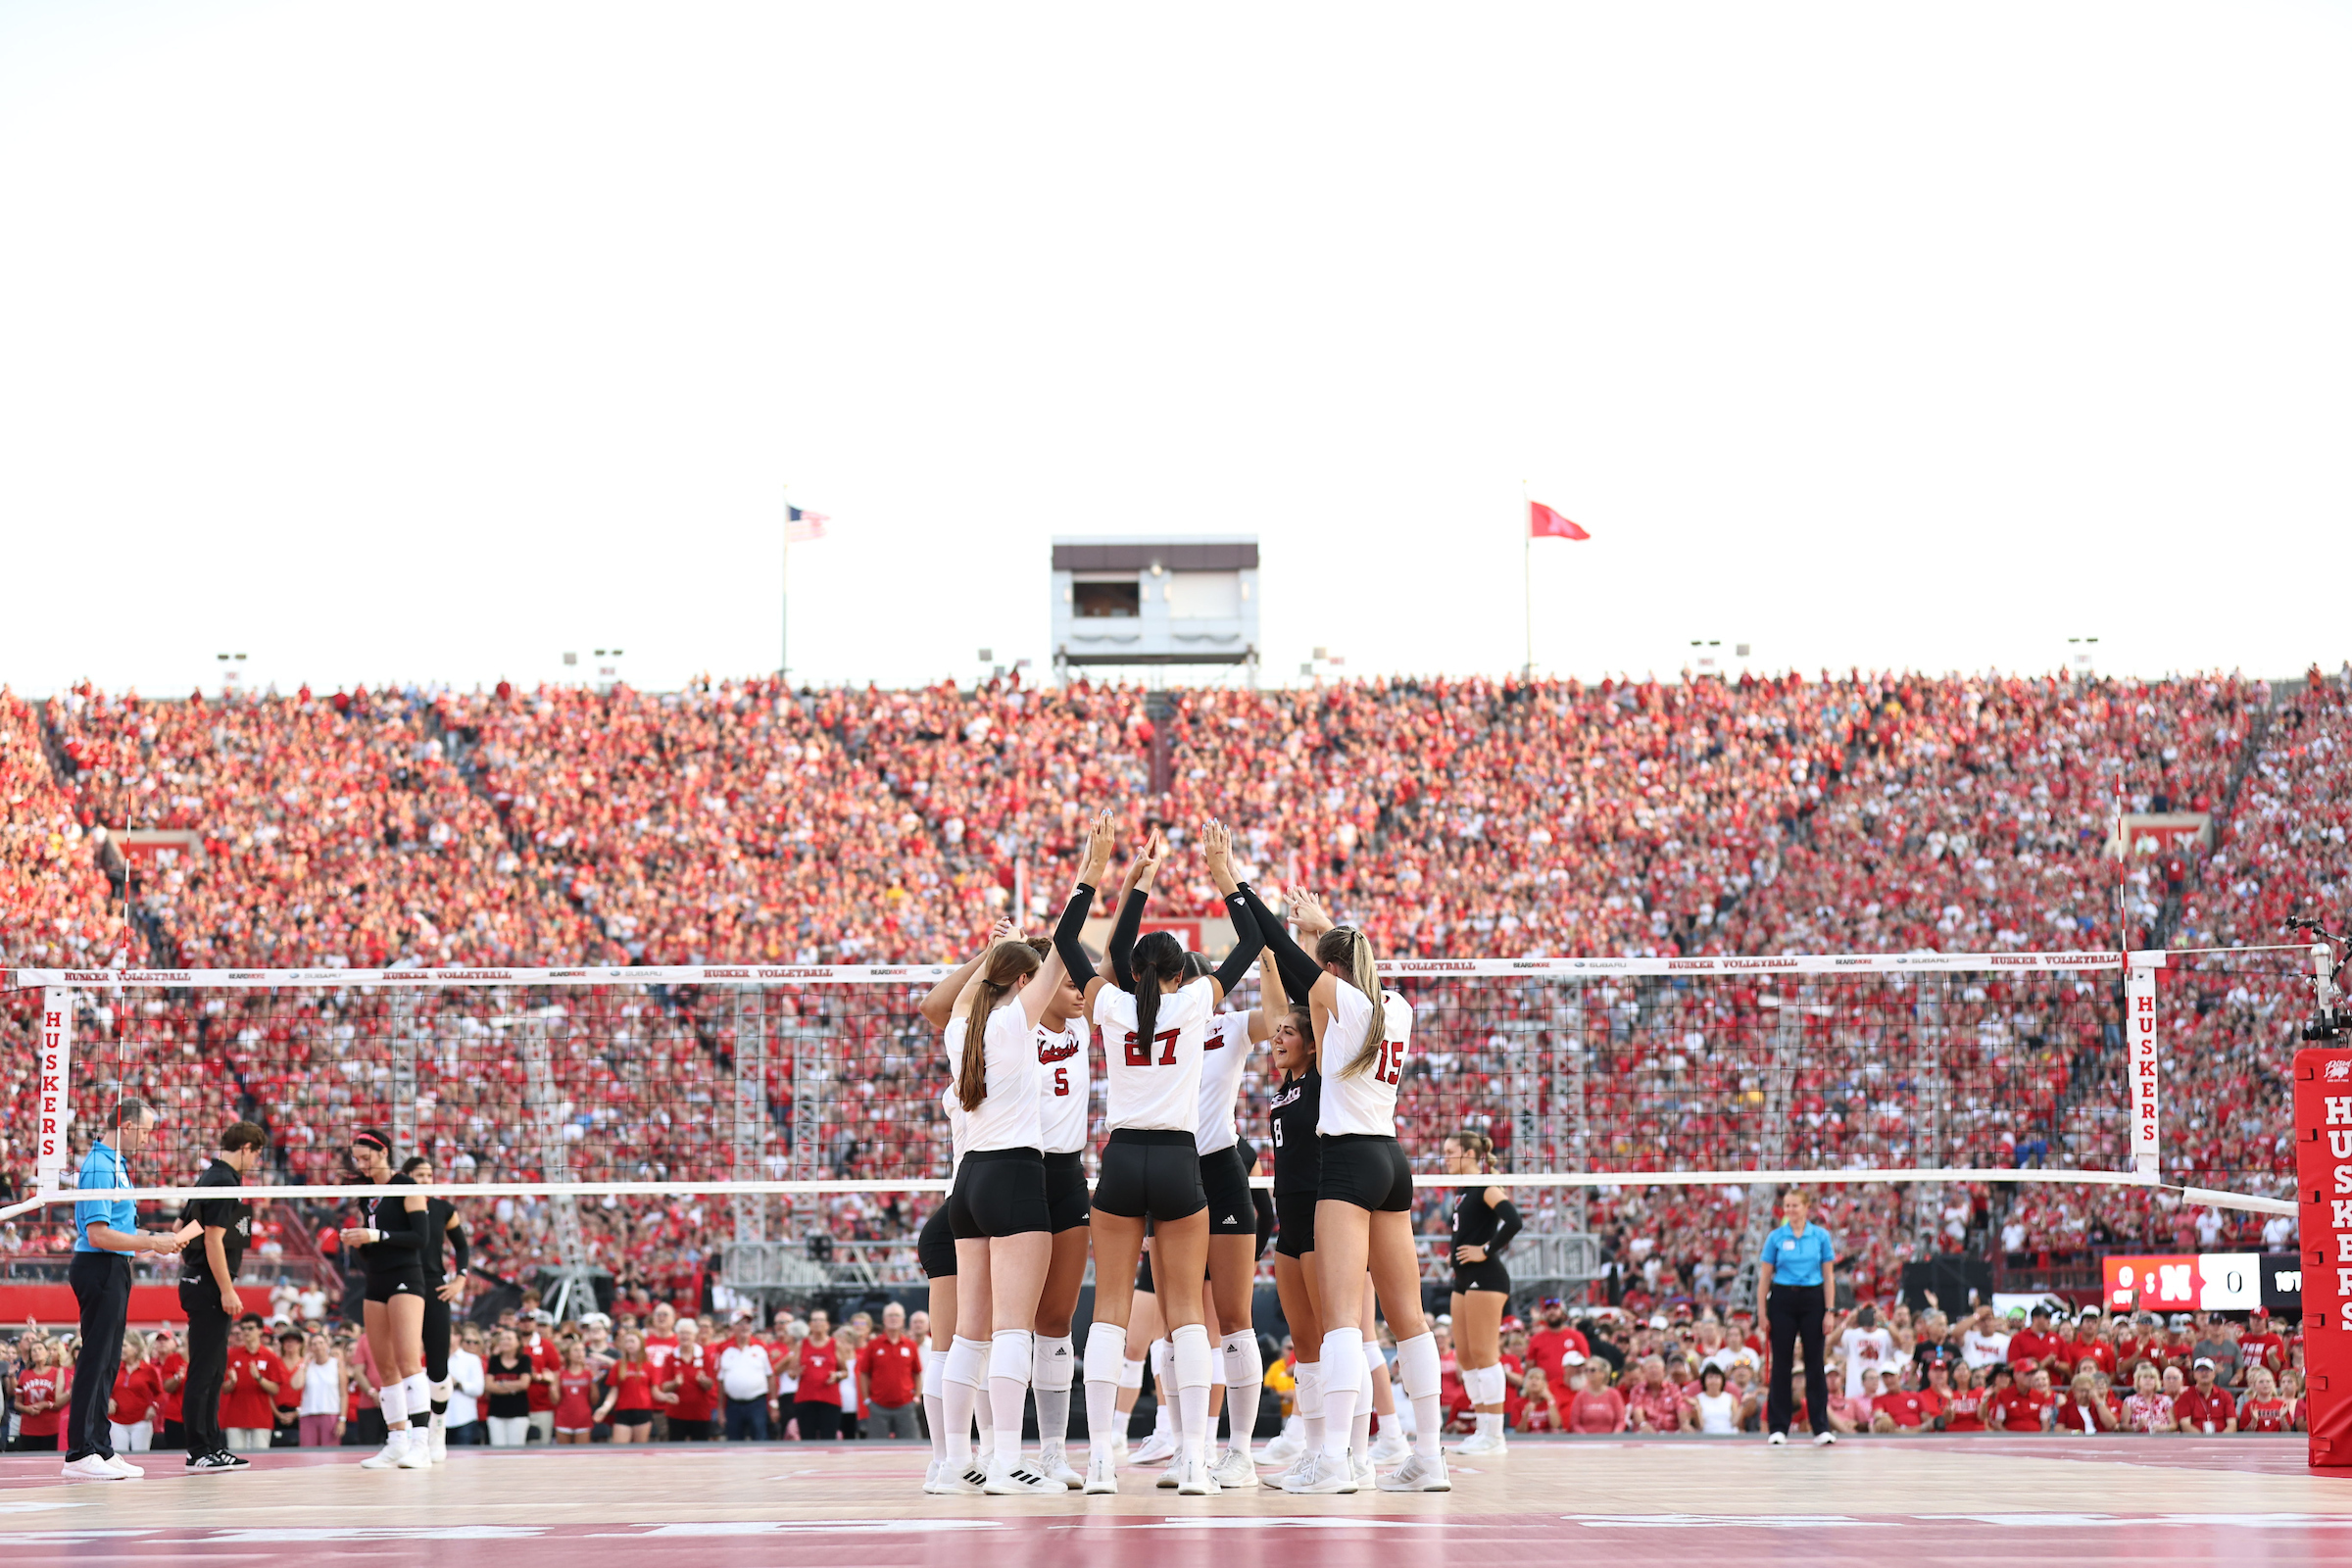 Volleyball Day in Nebraska breaks world attendance record for womens sports